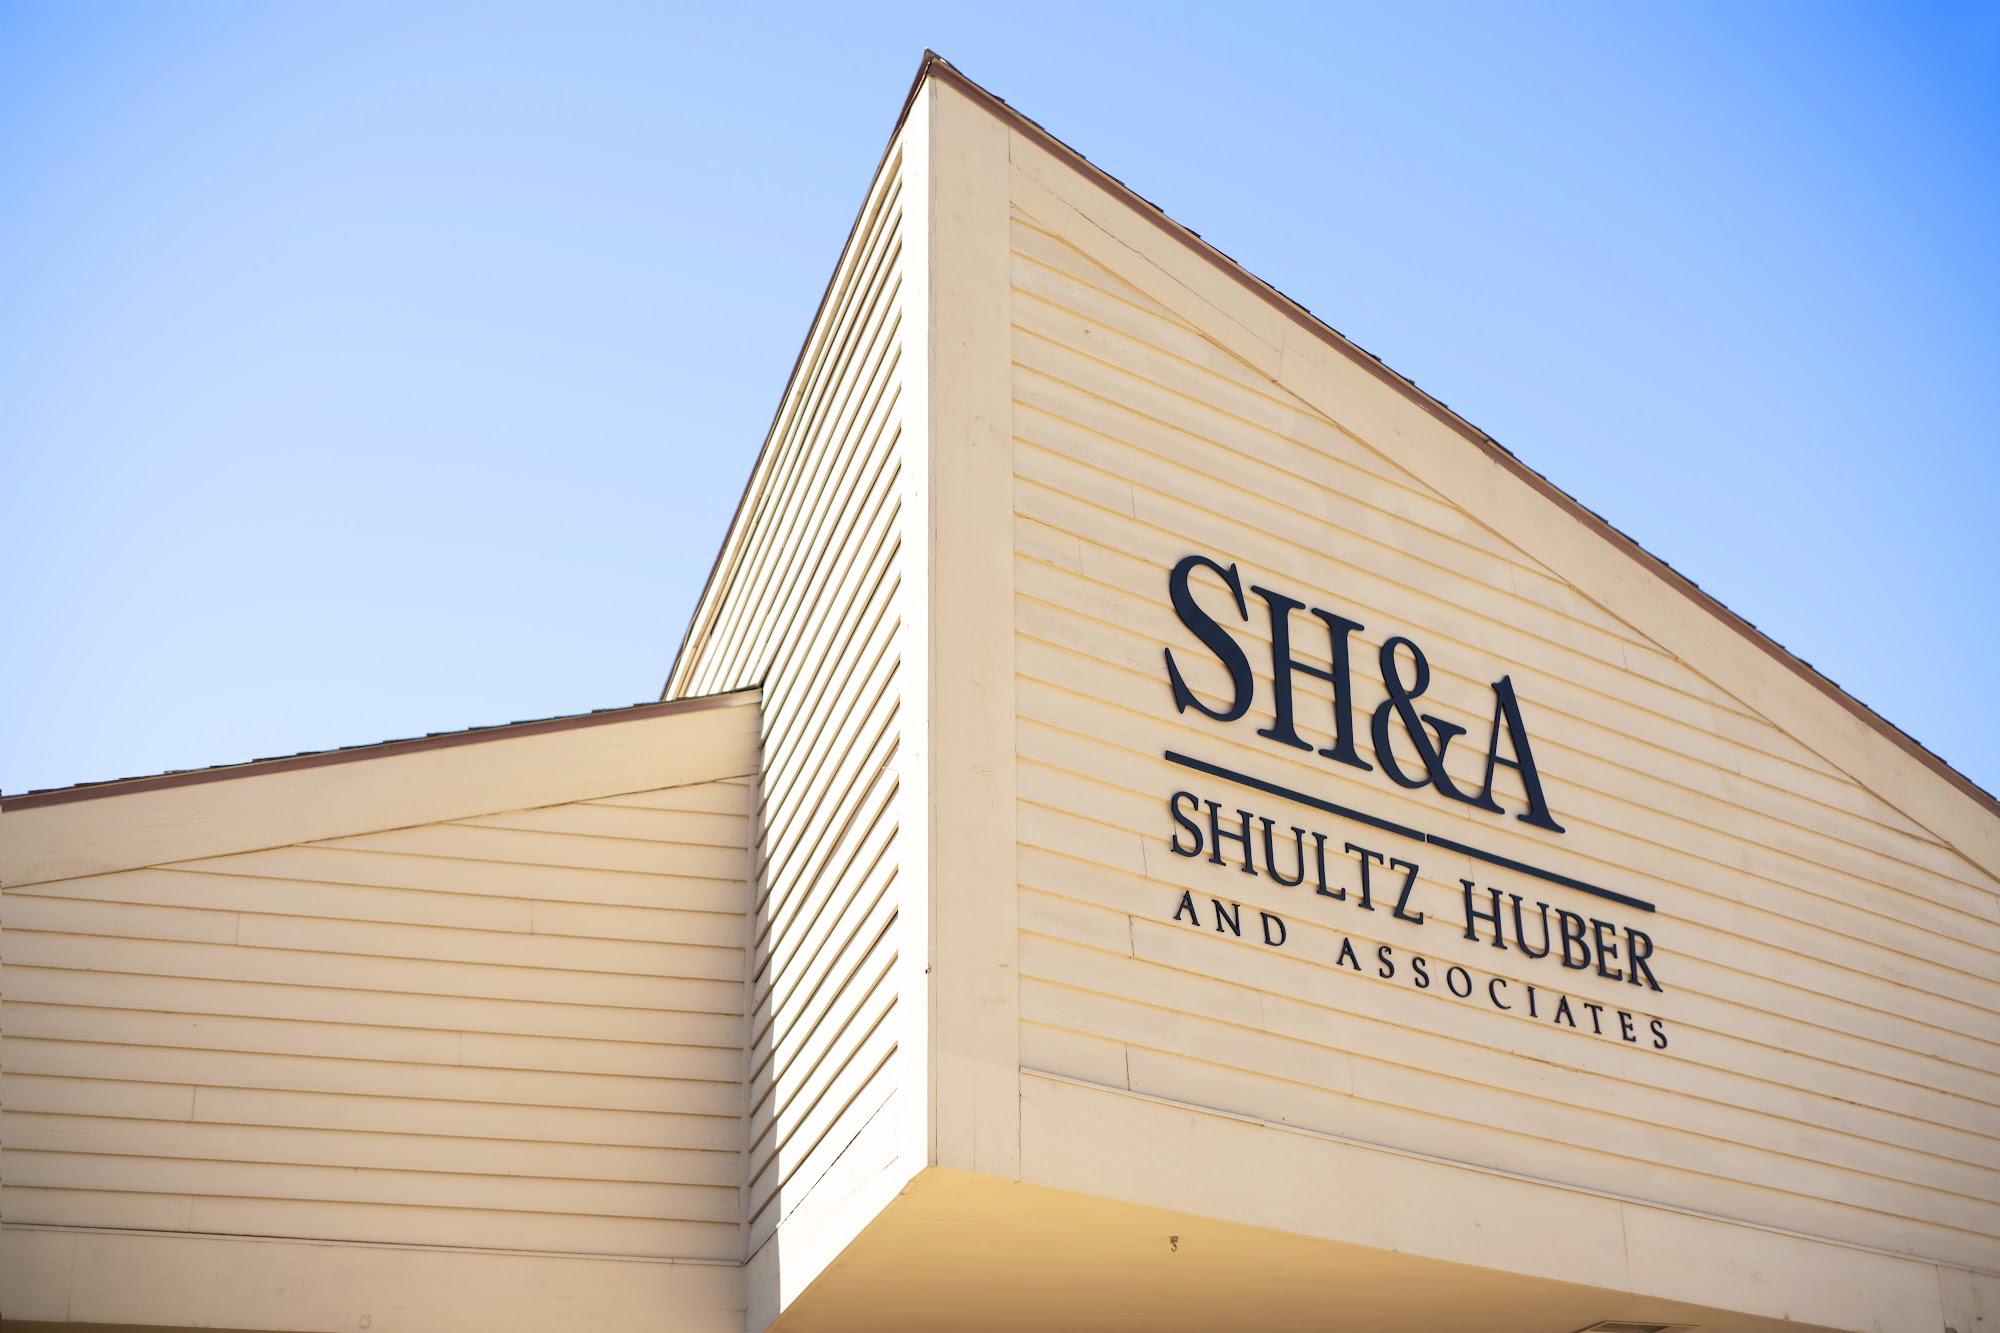 Shultz Huber & Associates, Inc. 105 Stryker St, Archbold Ohio 43502